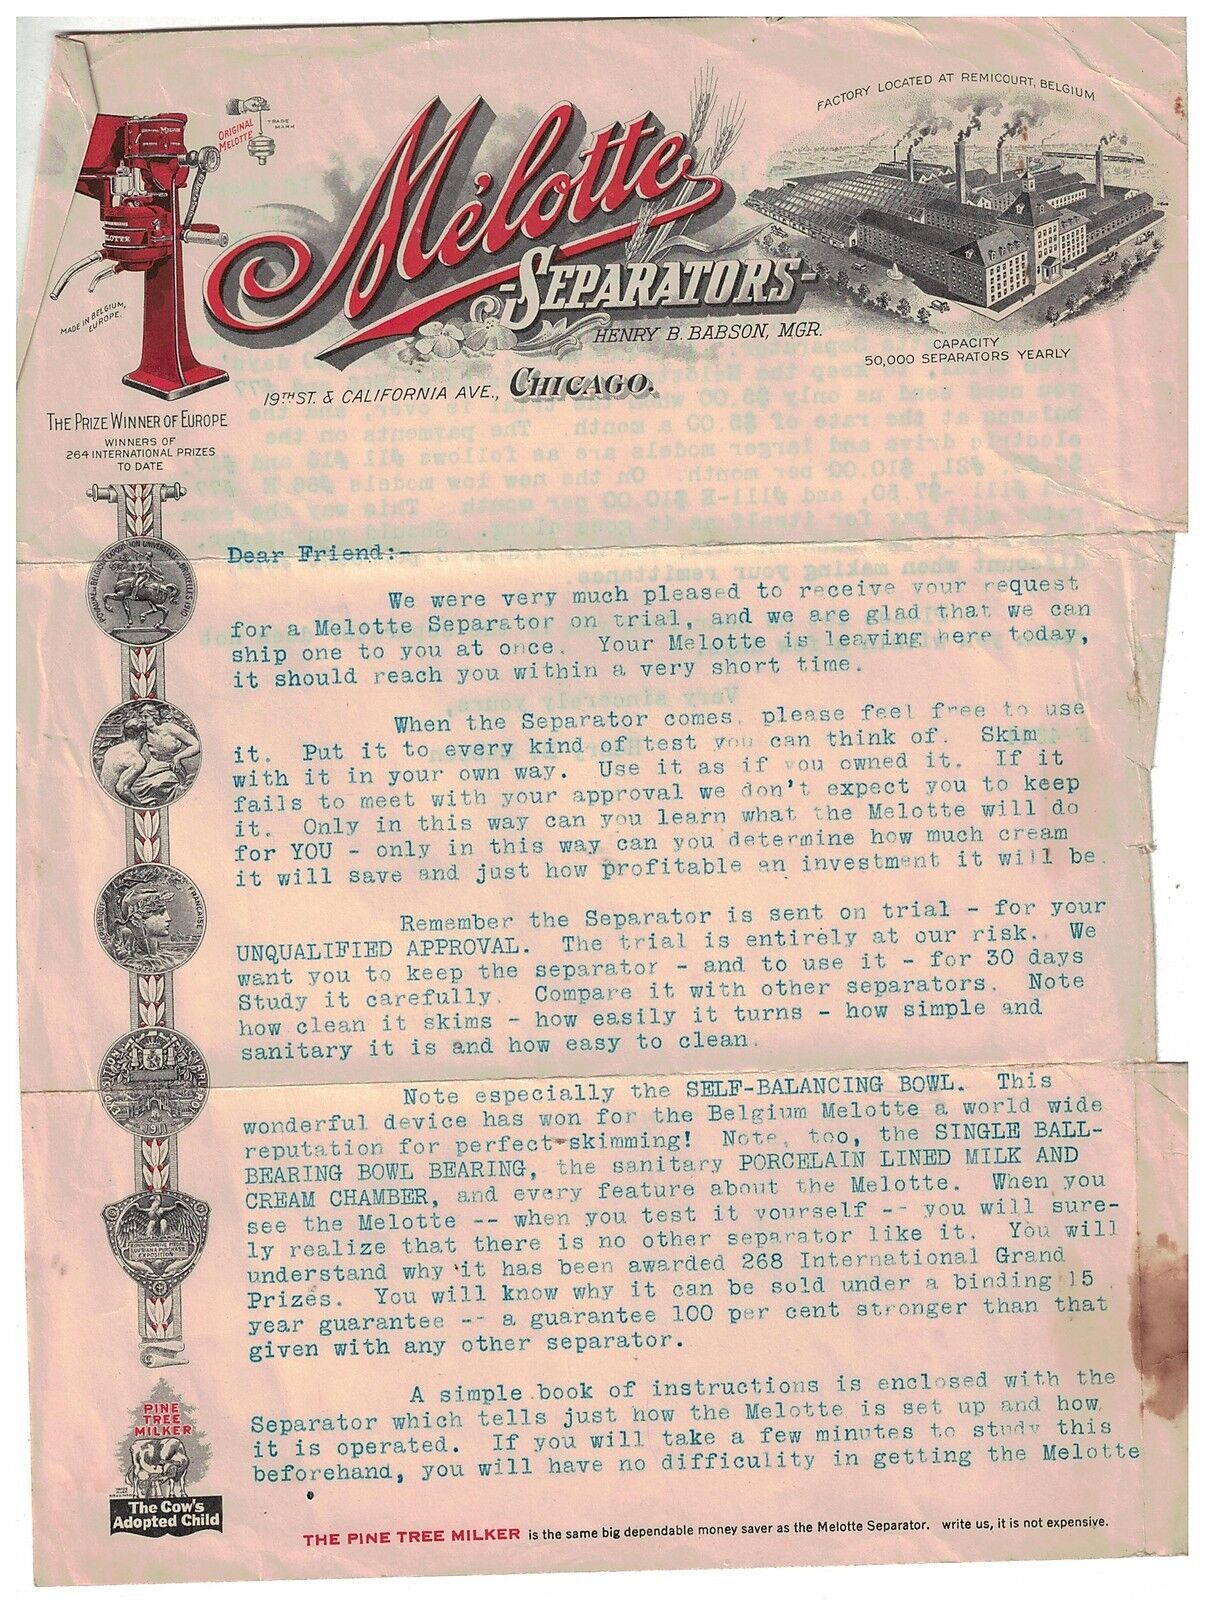 Vintage 1920s-30s Melotte Cream Separator letterhead